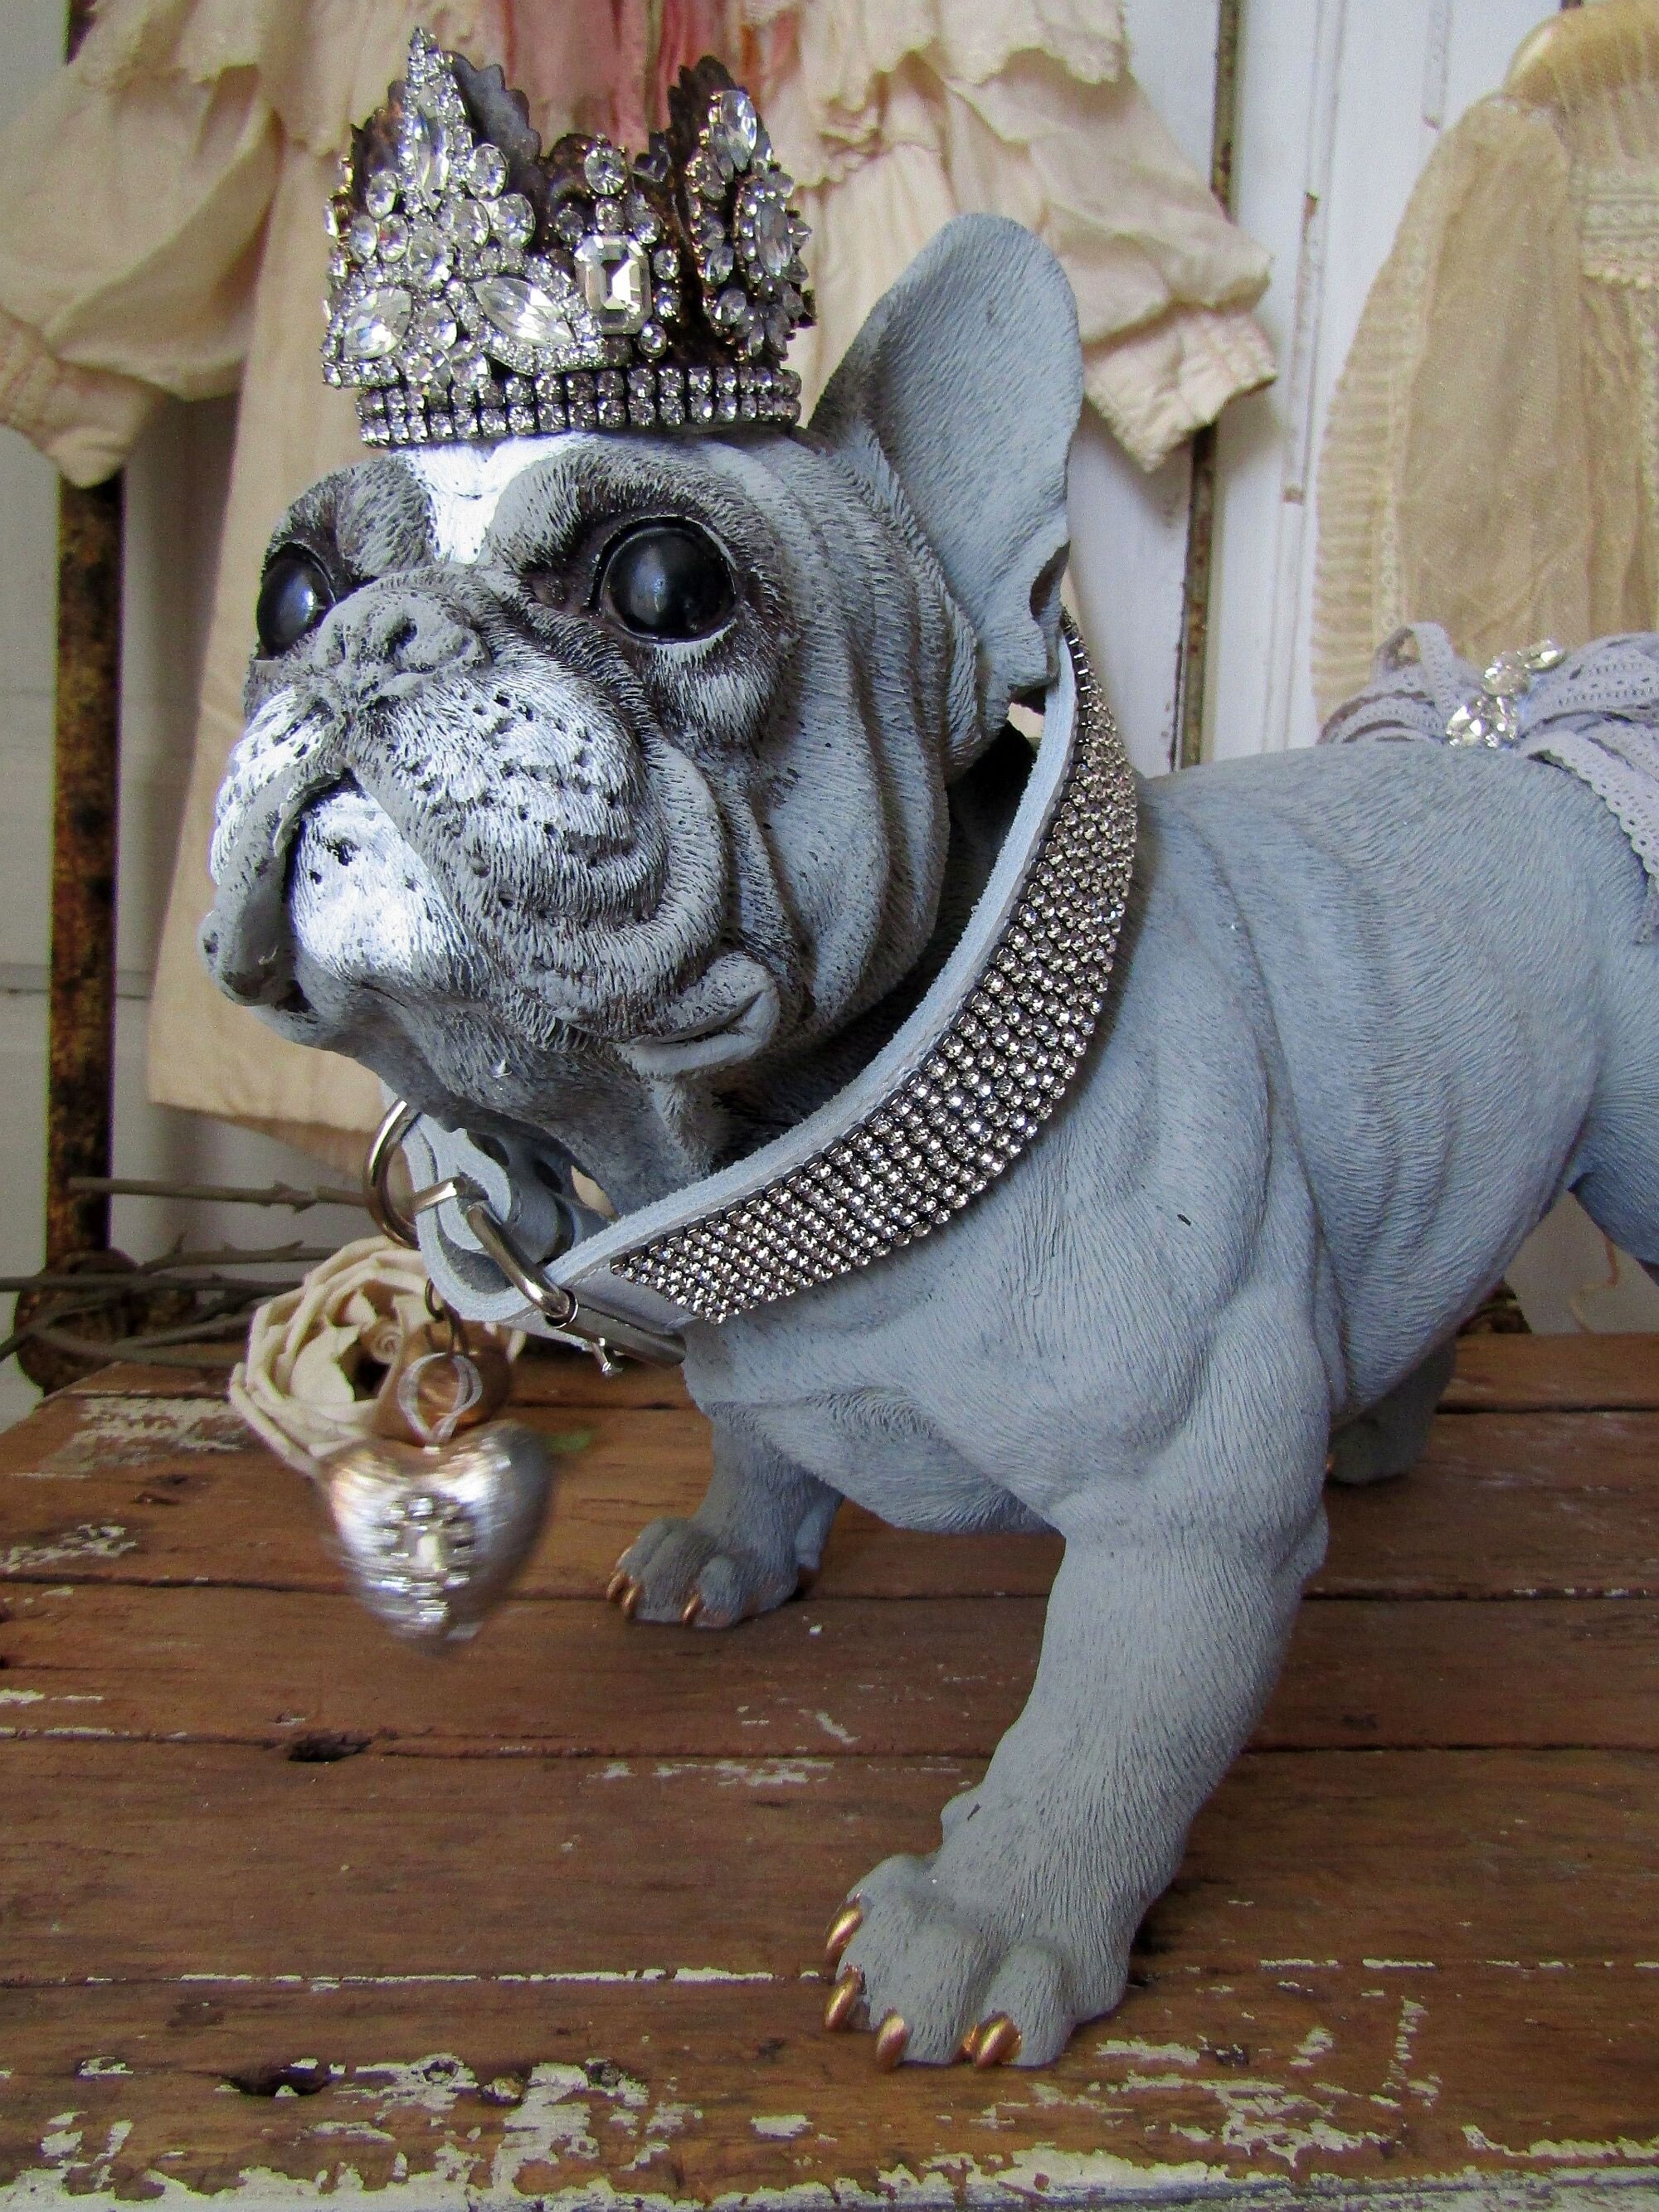 Blingy French Bulldog PU Leather Statue